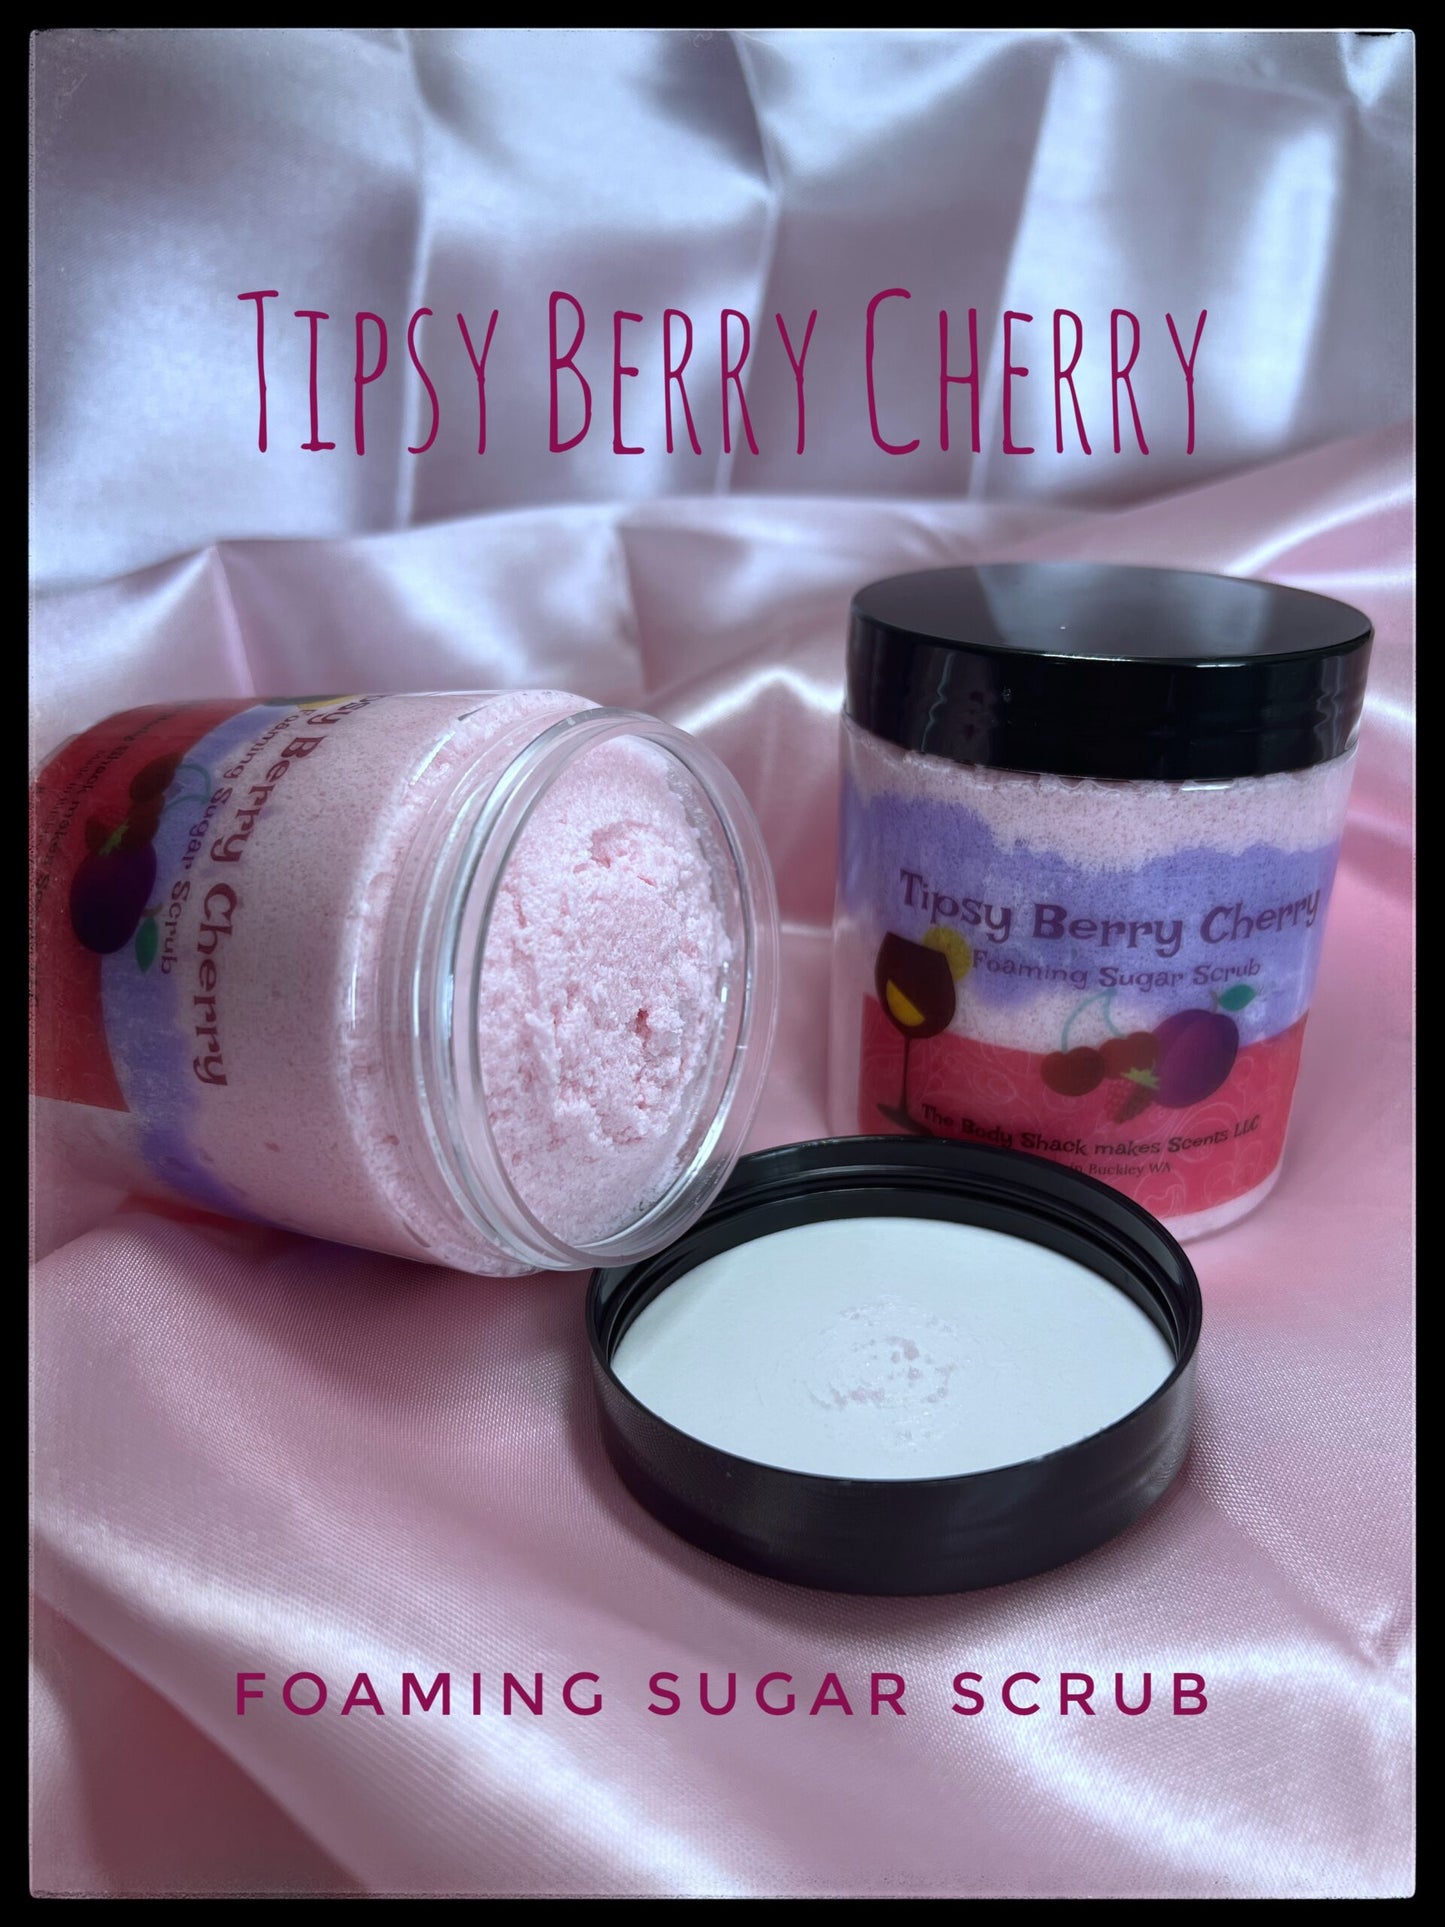 Tipsy Berry Cherry Foaming Sugar Scrub